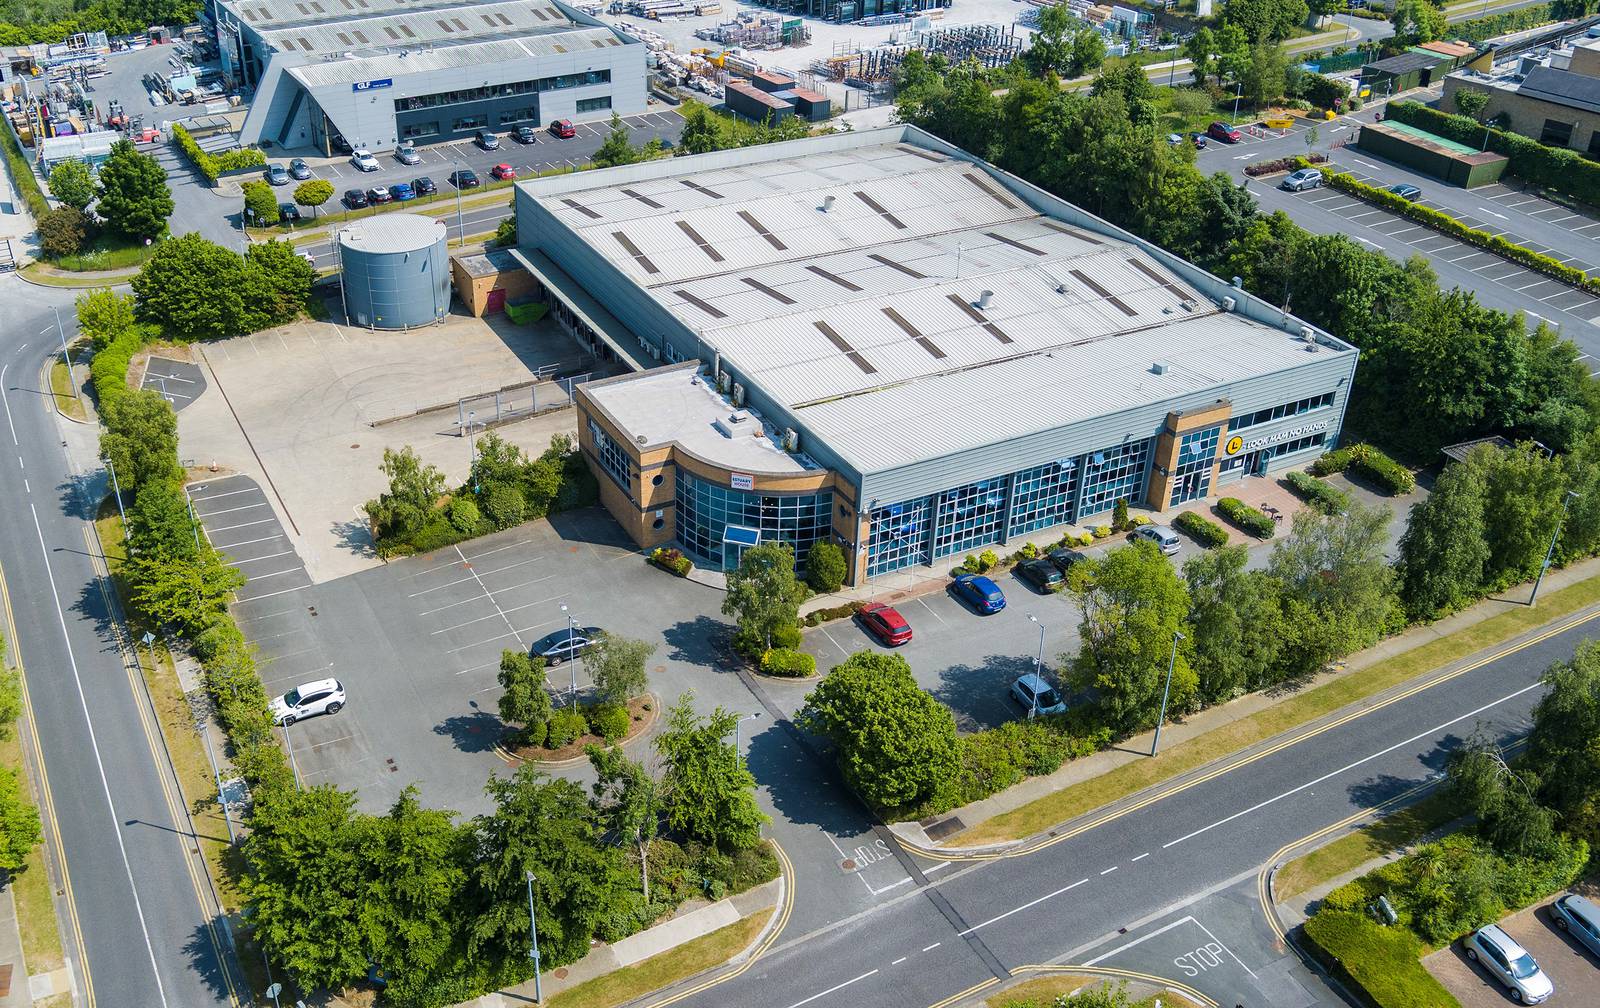 Former Gamestop headquarters in Swords seeking €7m – The Irish Times